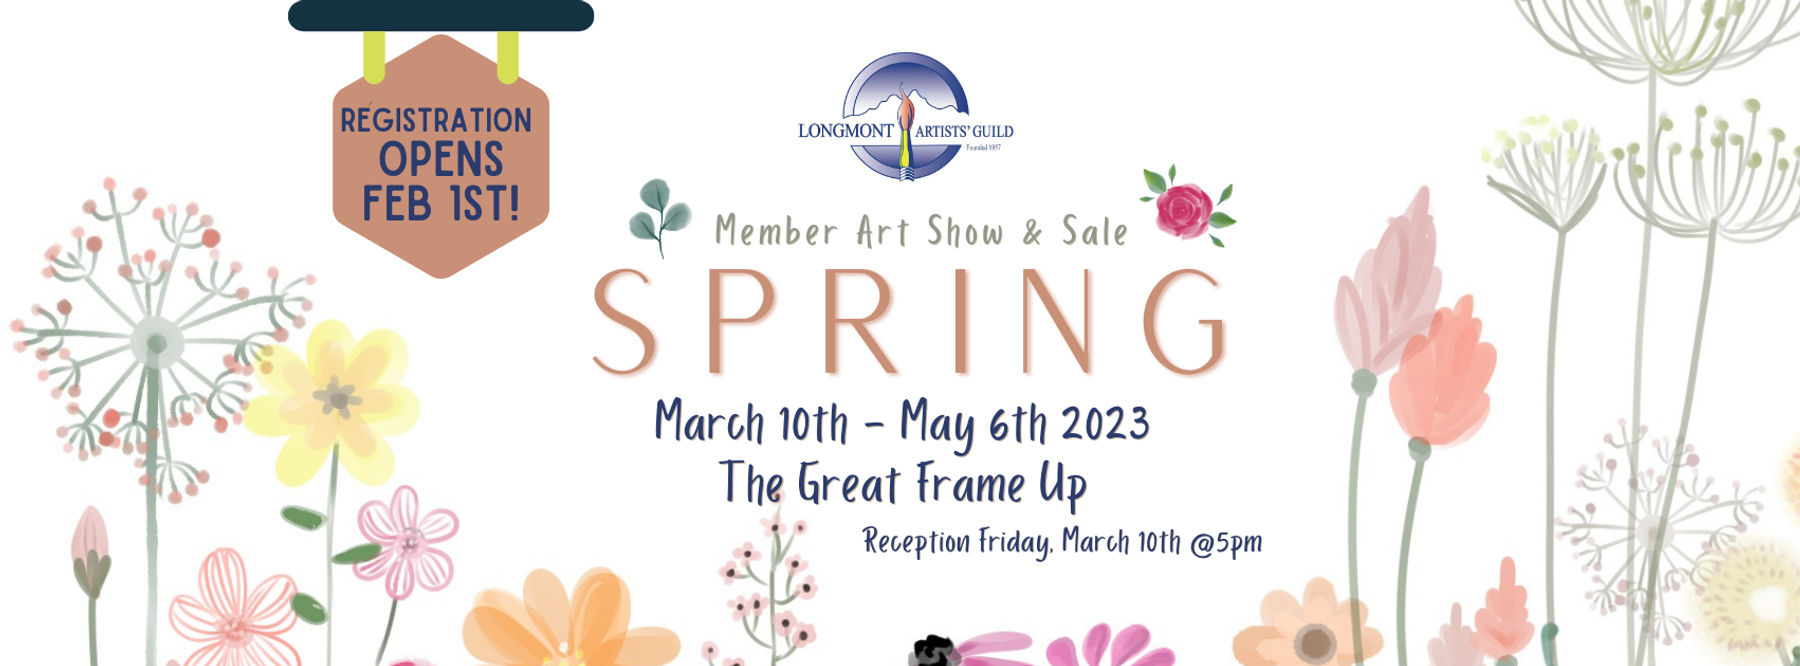 Longmont Artists' Guild Spring Member Art Show & Sale